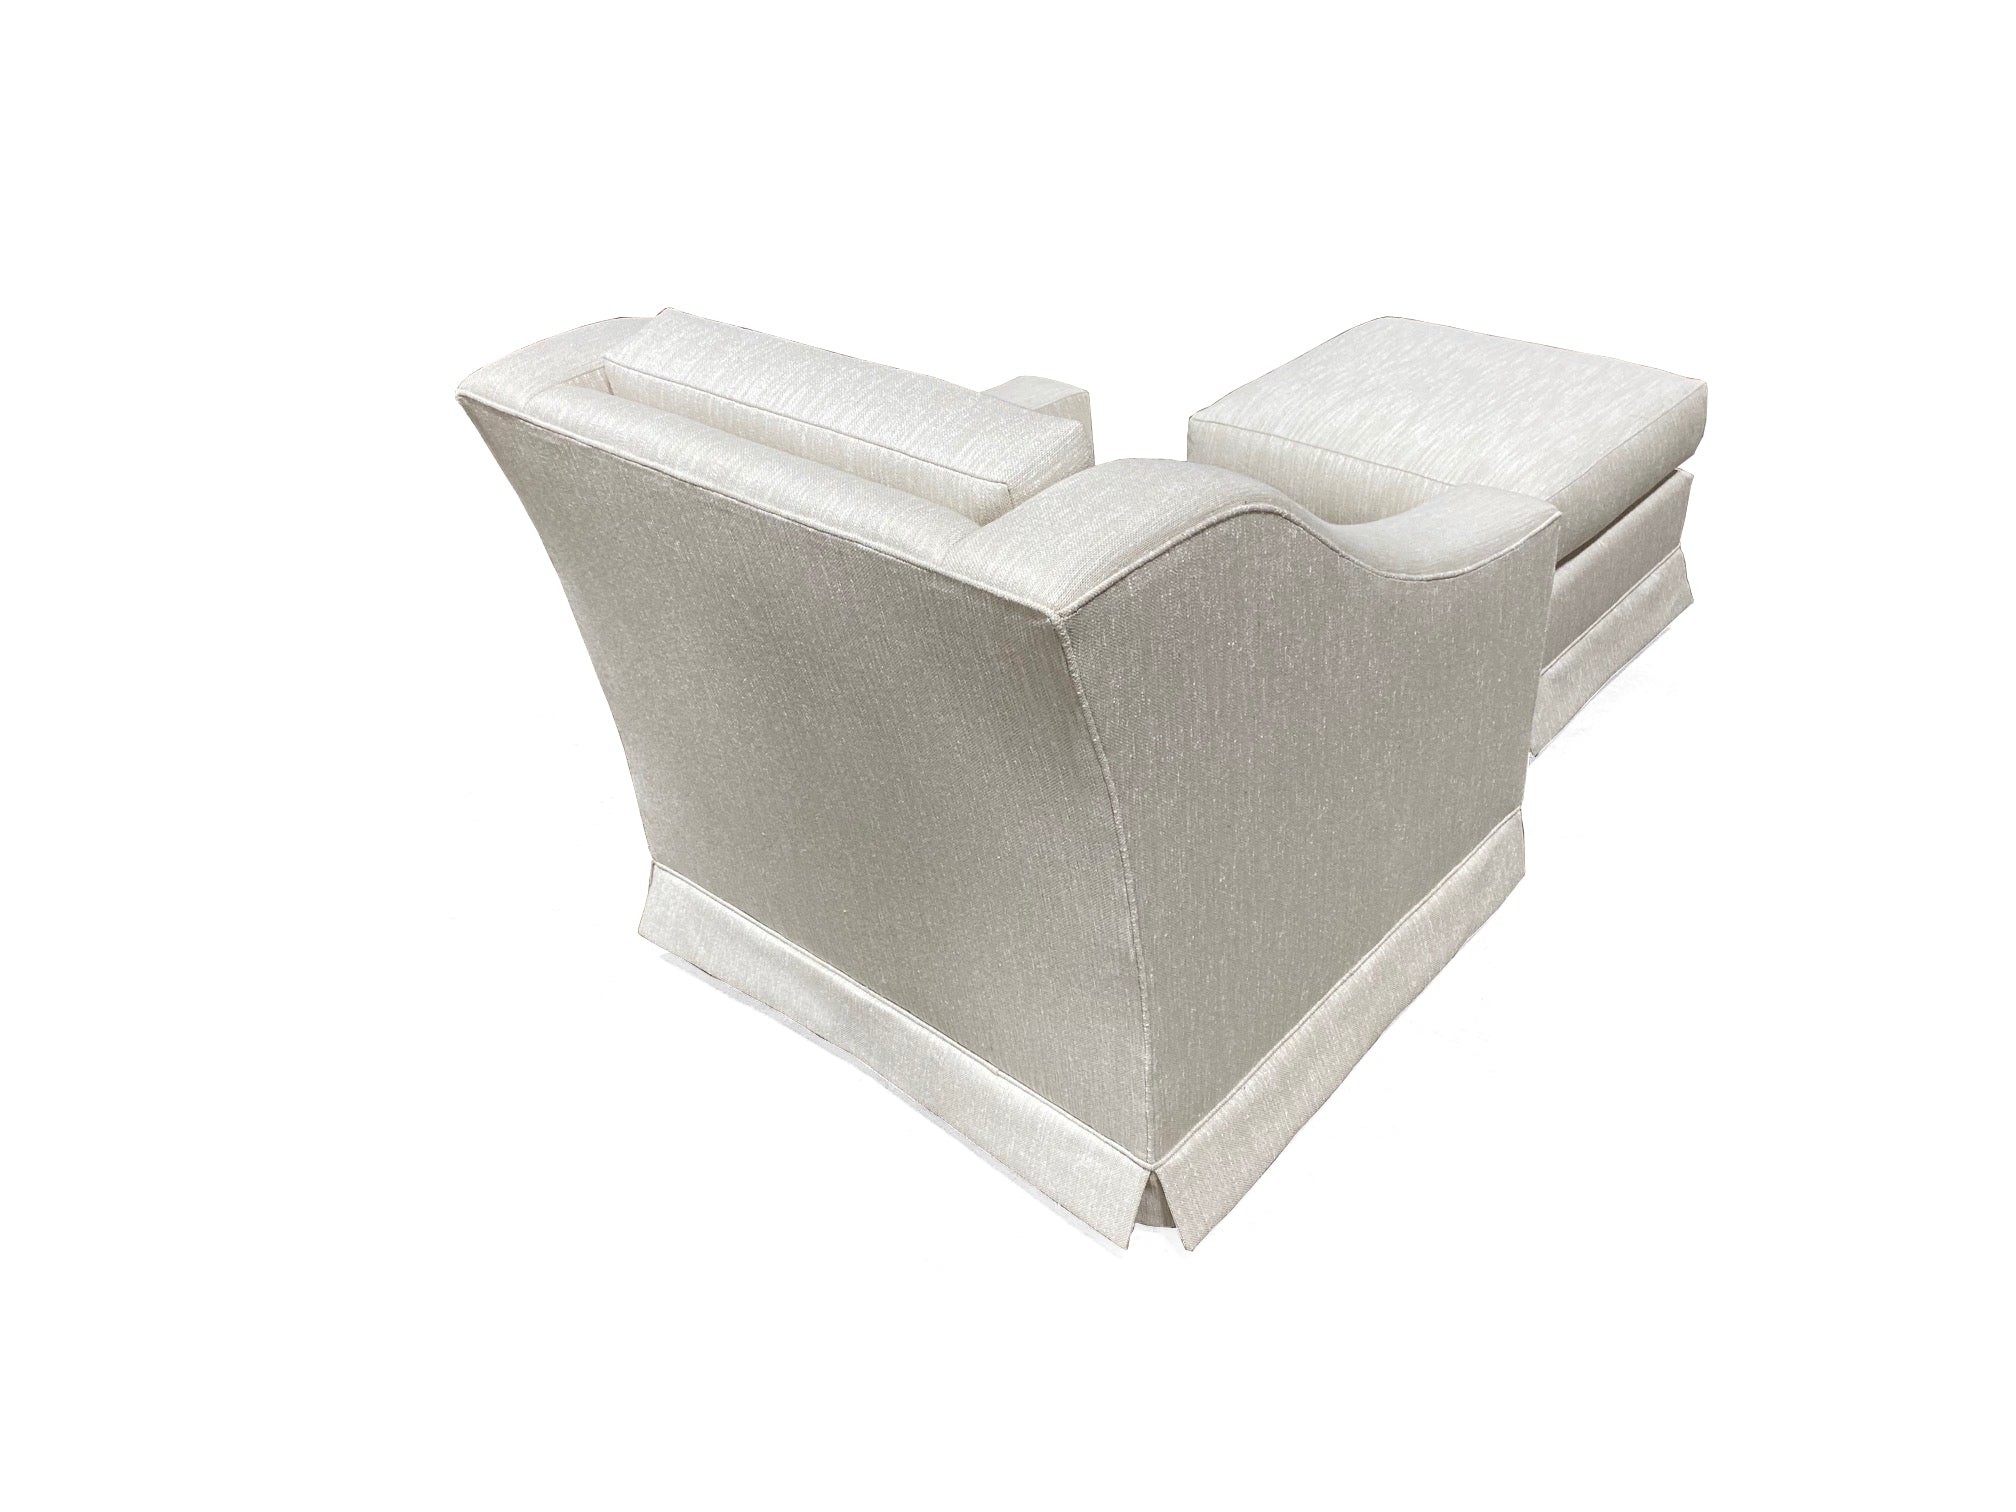 Tom Organic Sofa - no flame retardants of PFAS - Made in the USA - Pure  Upholstery